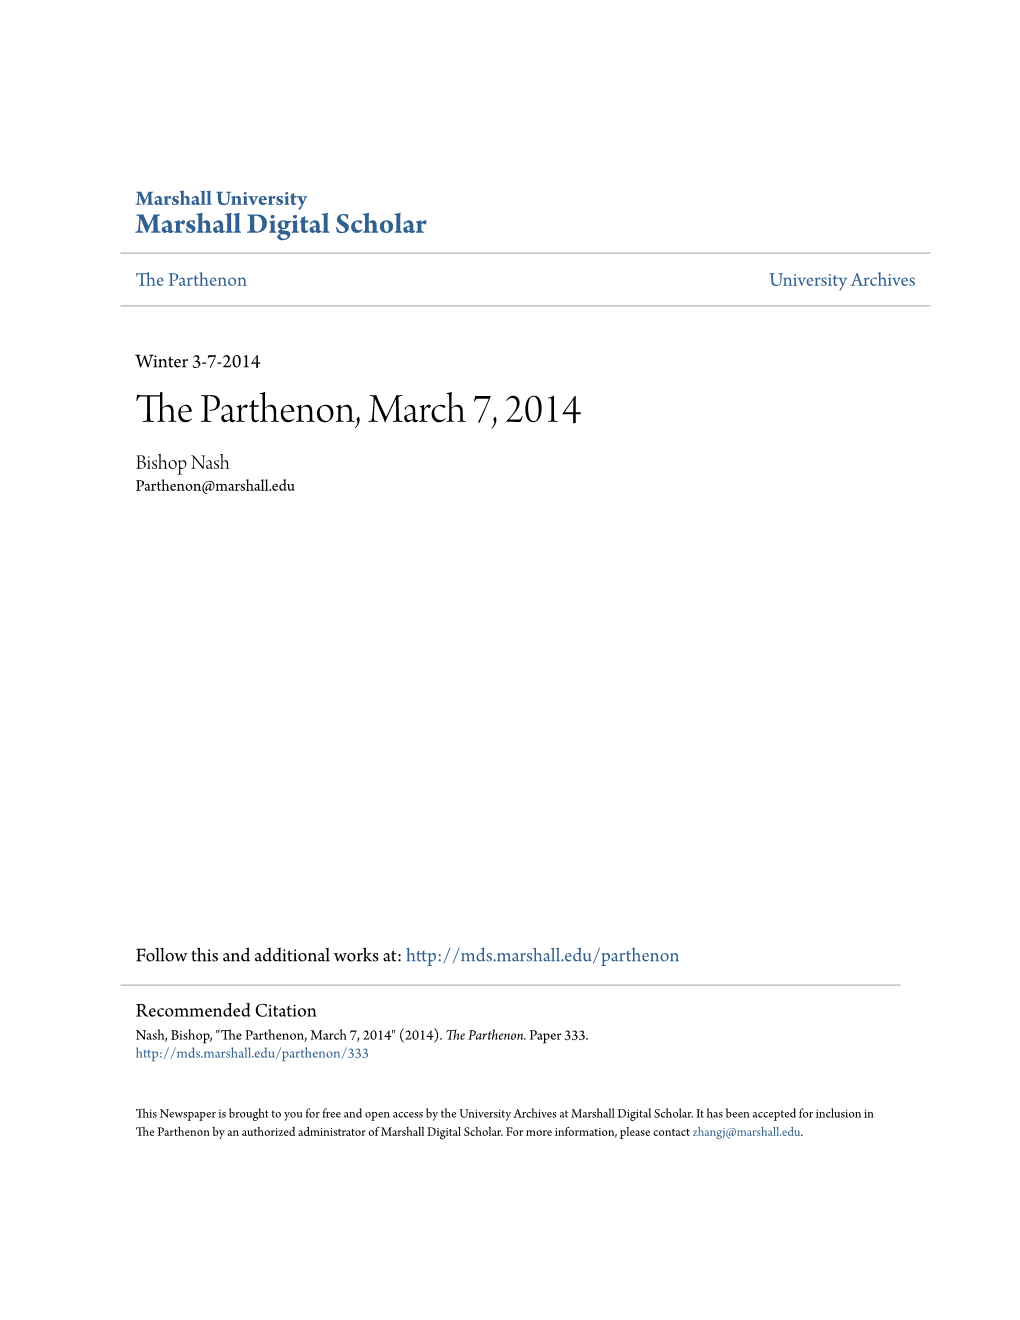 The Parthenon, March 7, 2014